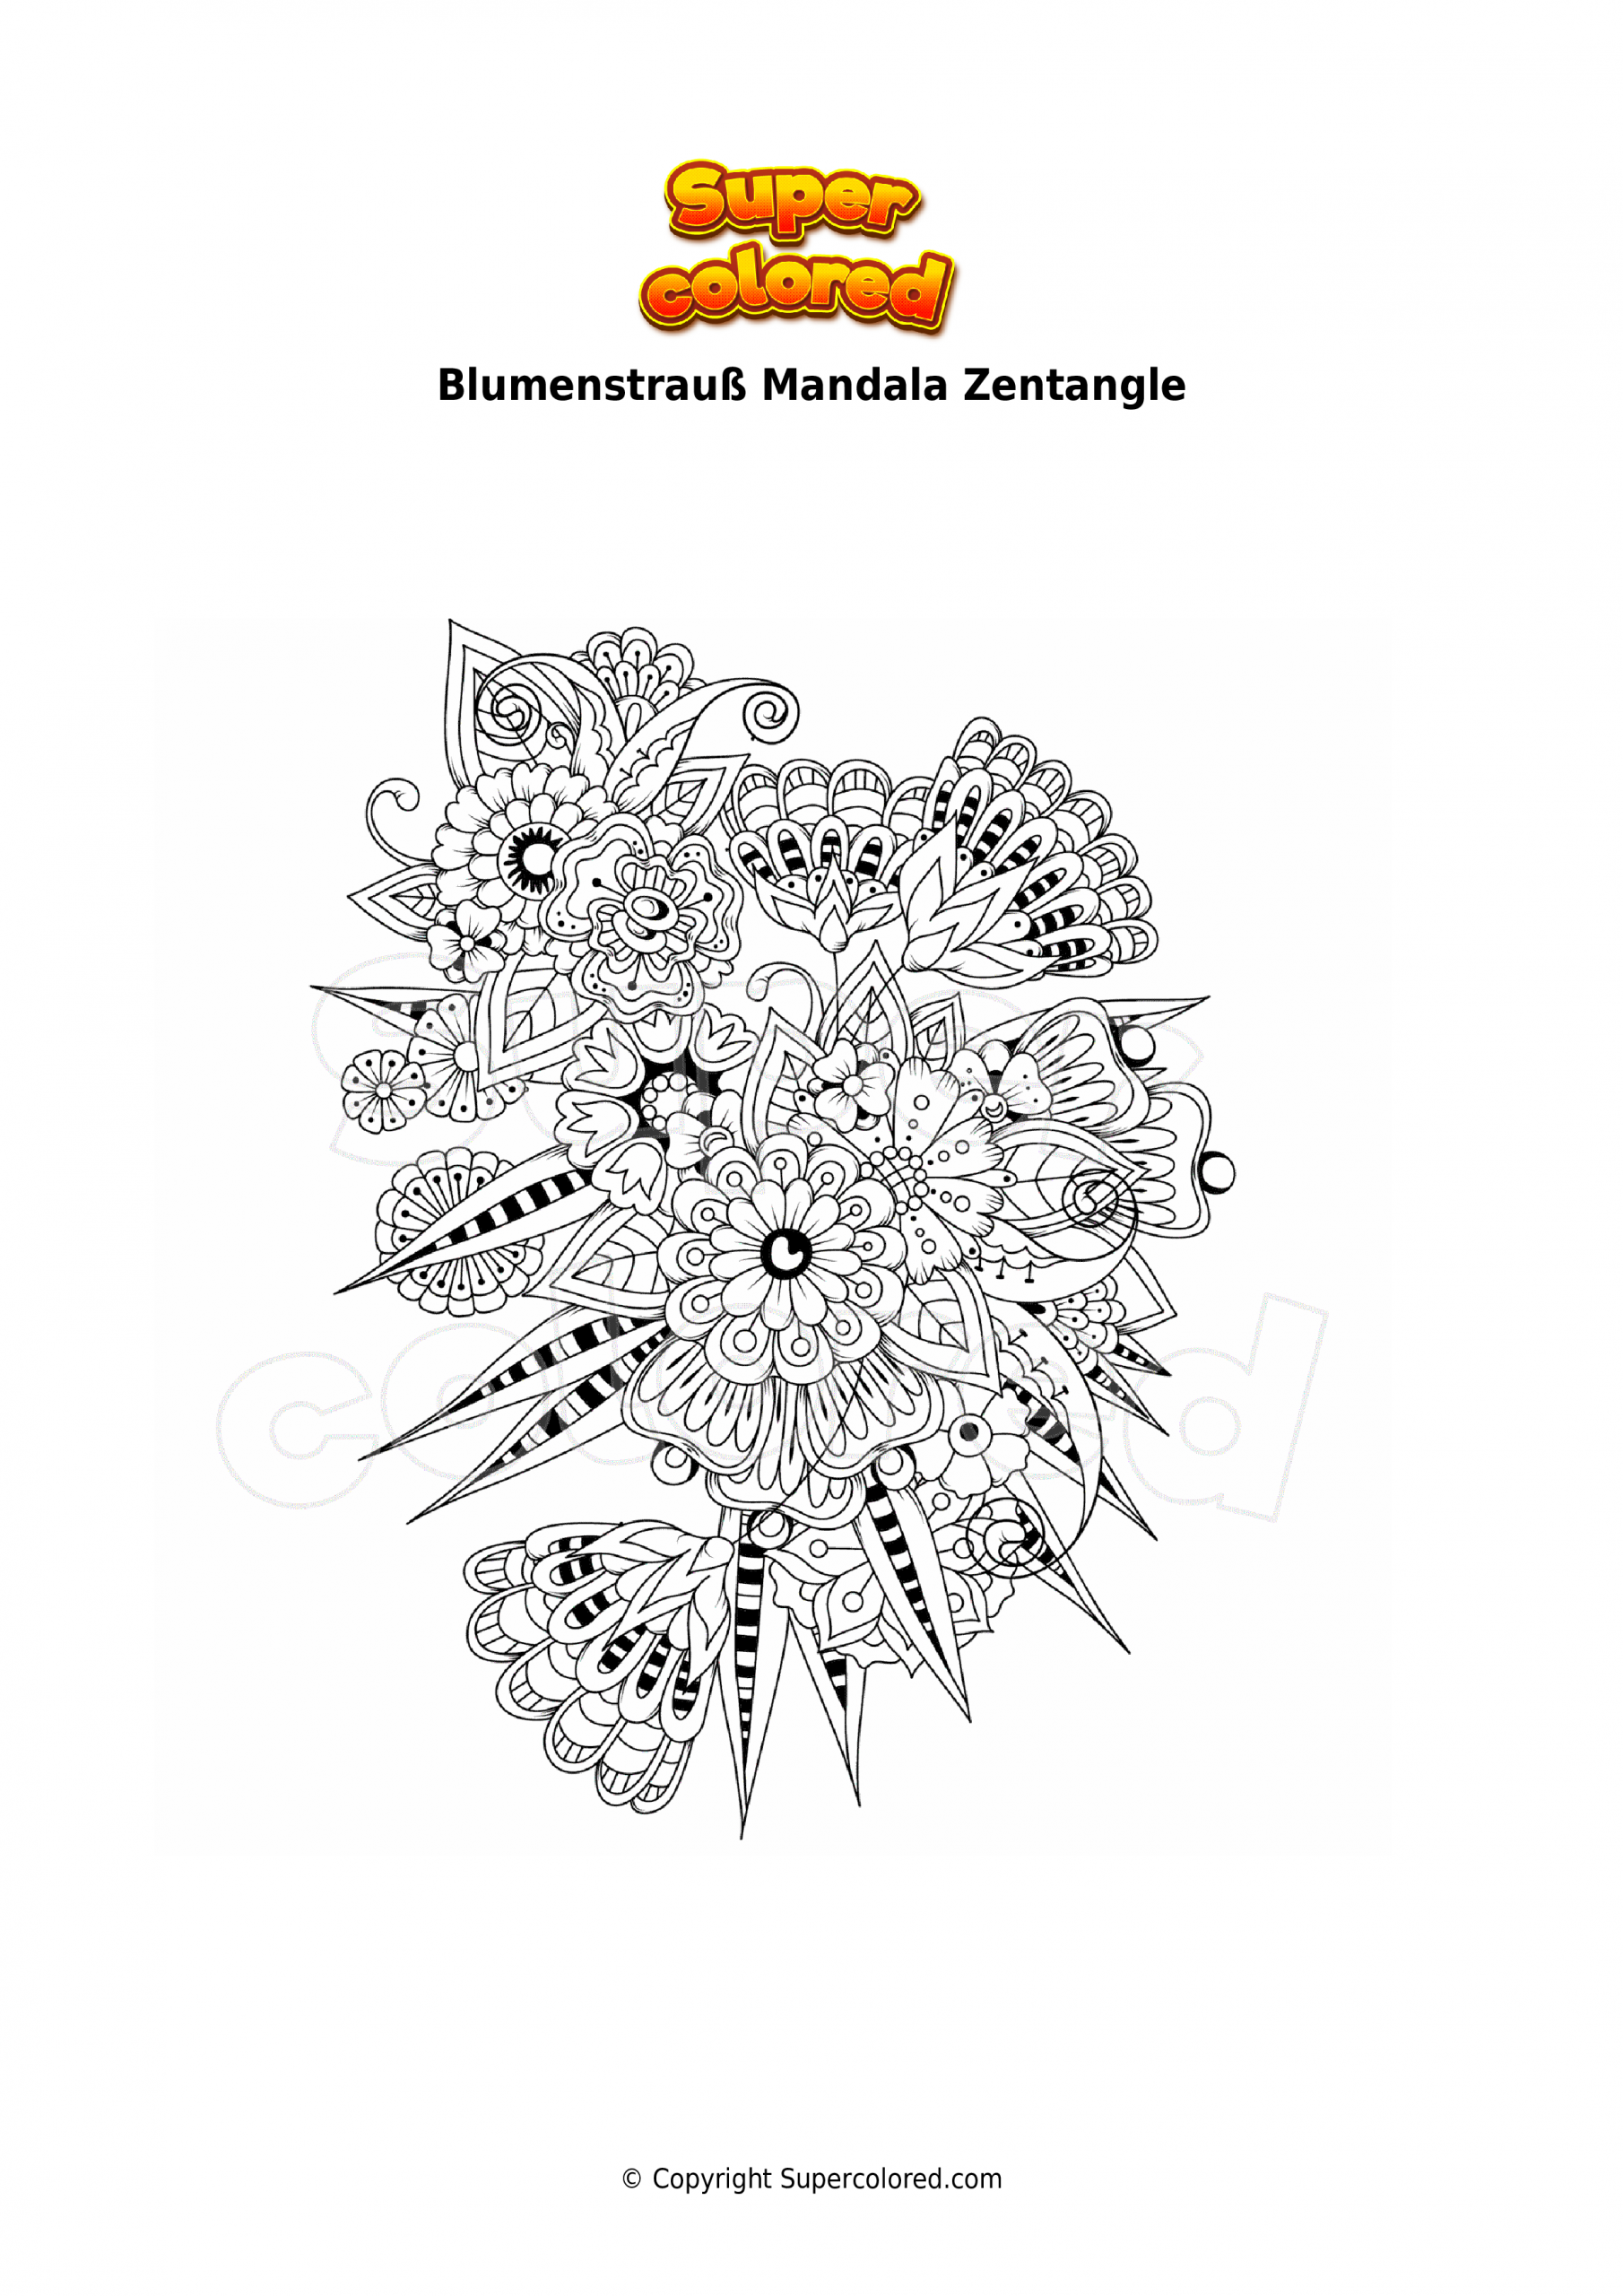 Ausmalbild Blumenstrauß Mandala Zentangle - Supercolored in Ausmalbild Blumenstrauss